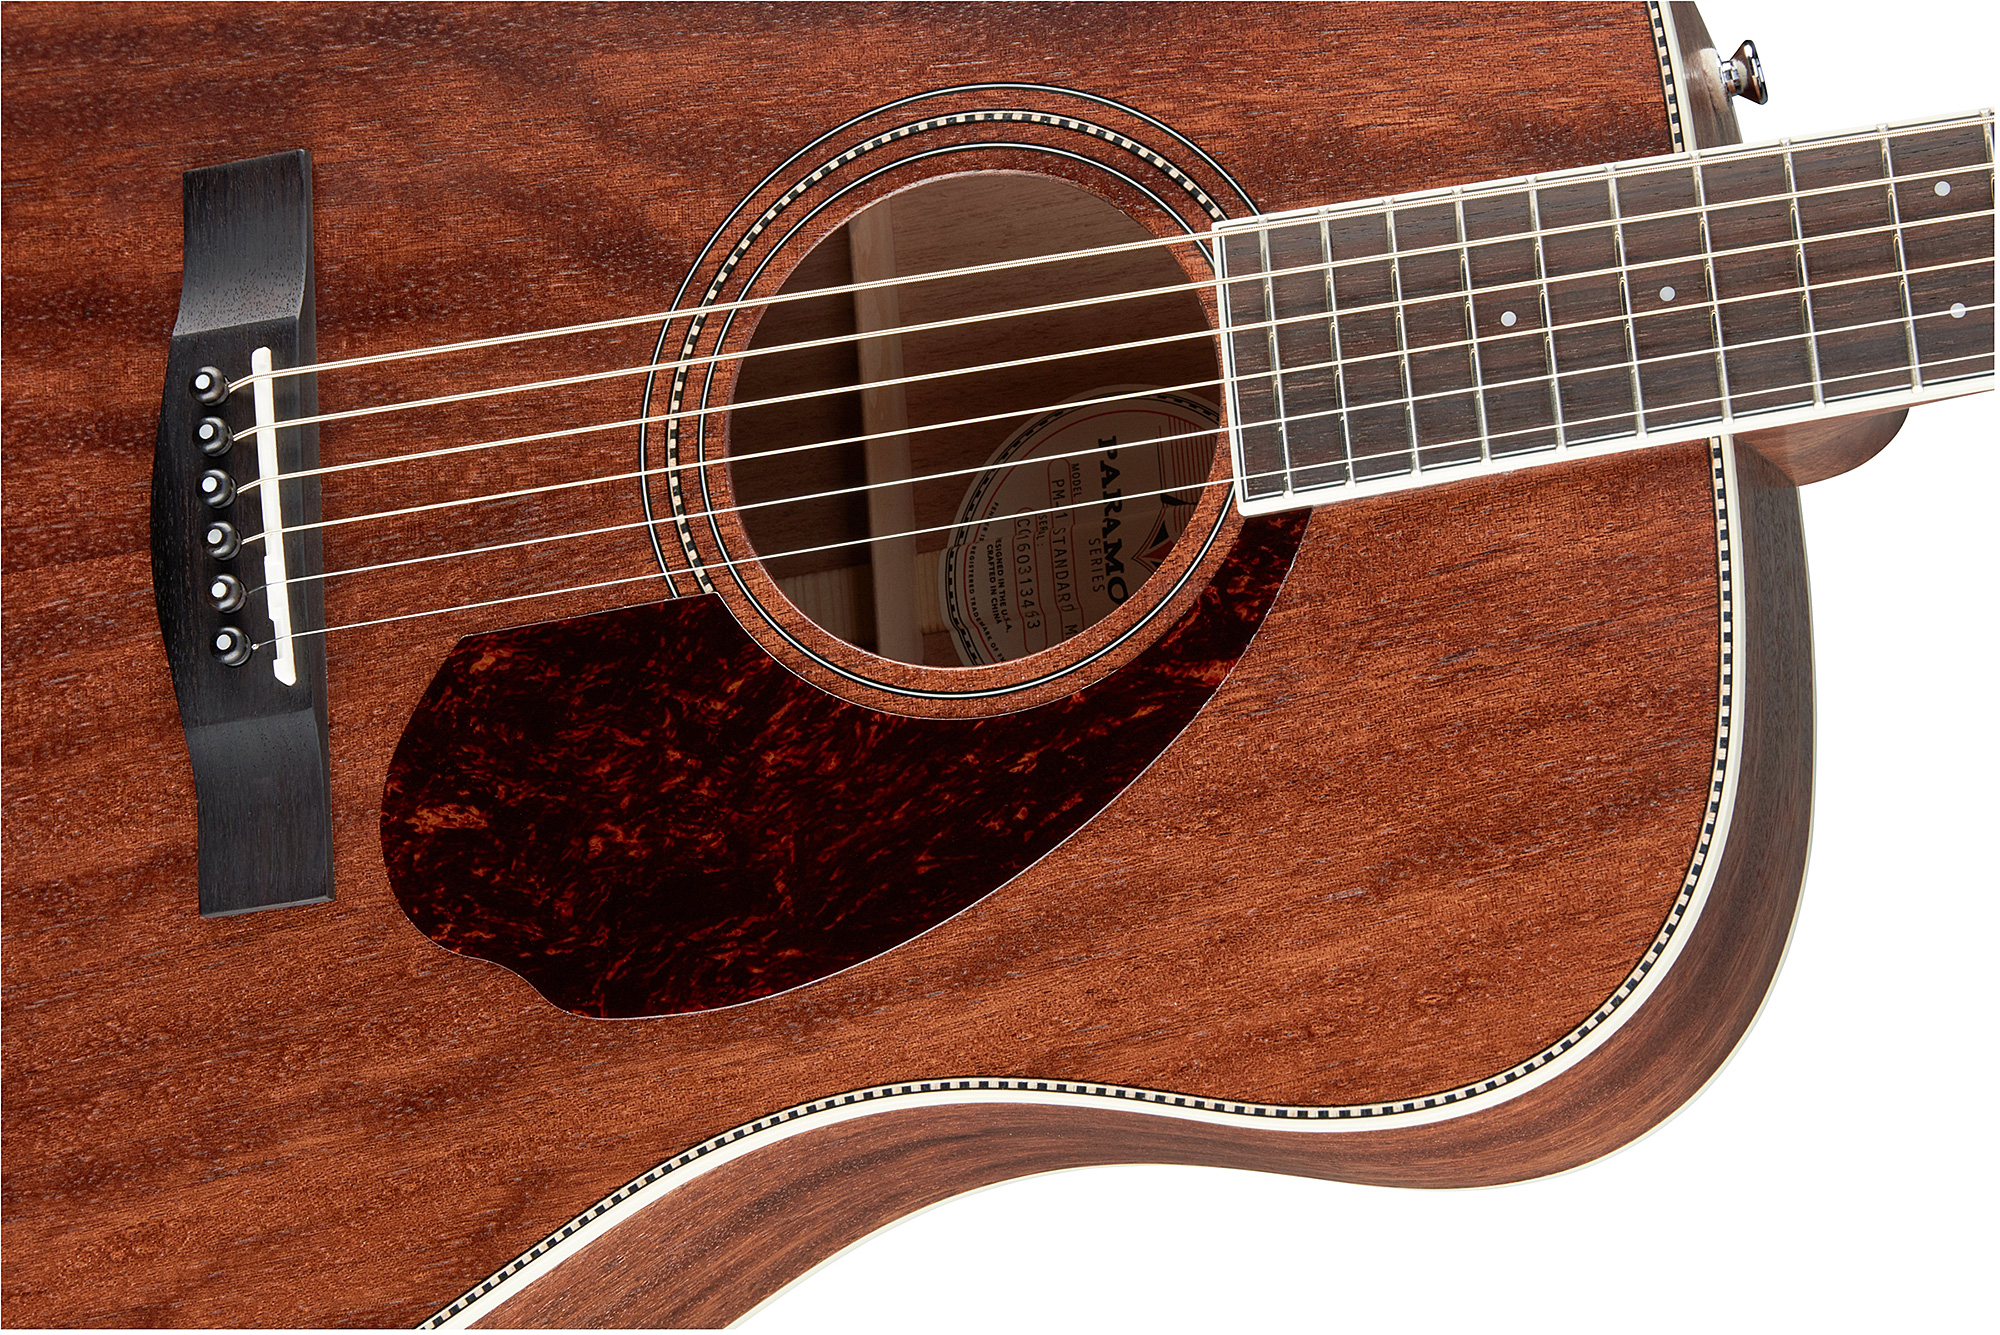 Fender Pm-1 Standard All Mahogany Case Paramount Dreadnought Tout Acajou 2016 - Natural Open Pore - Elektroakustische Gitarre - Variation 4